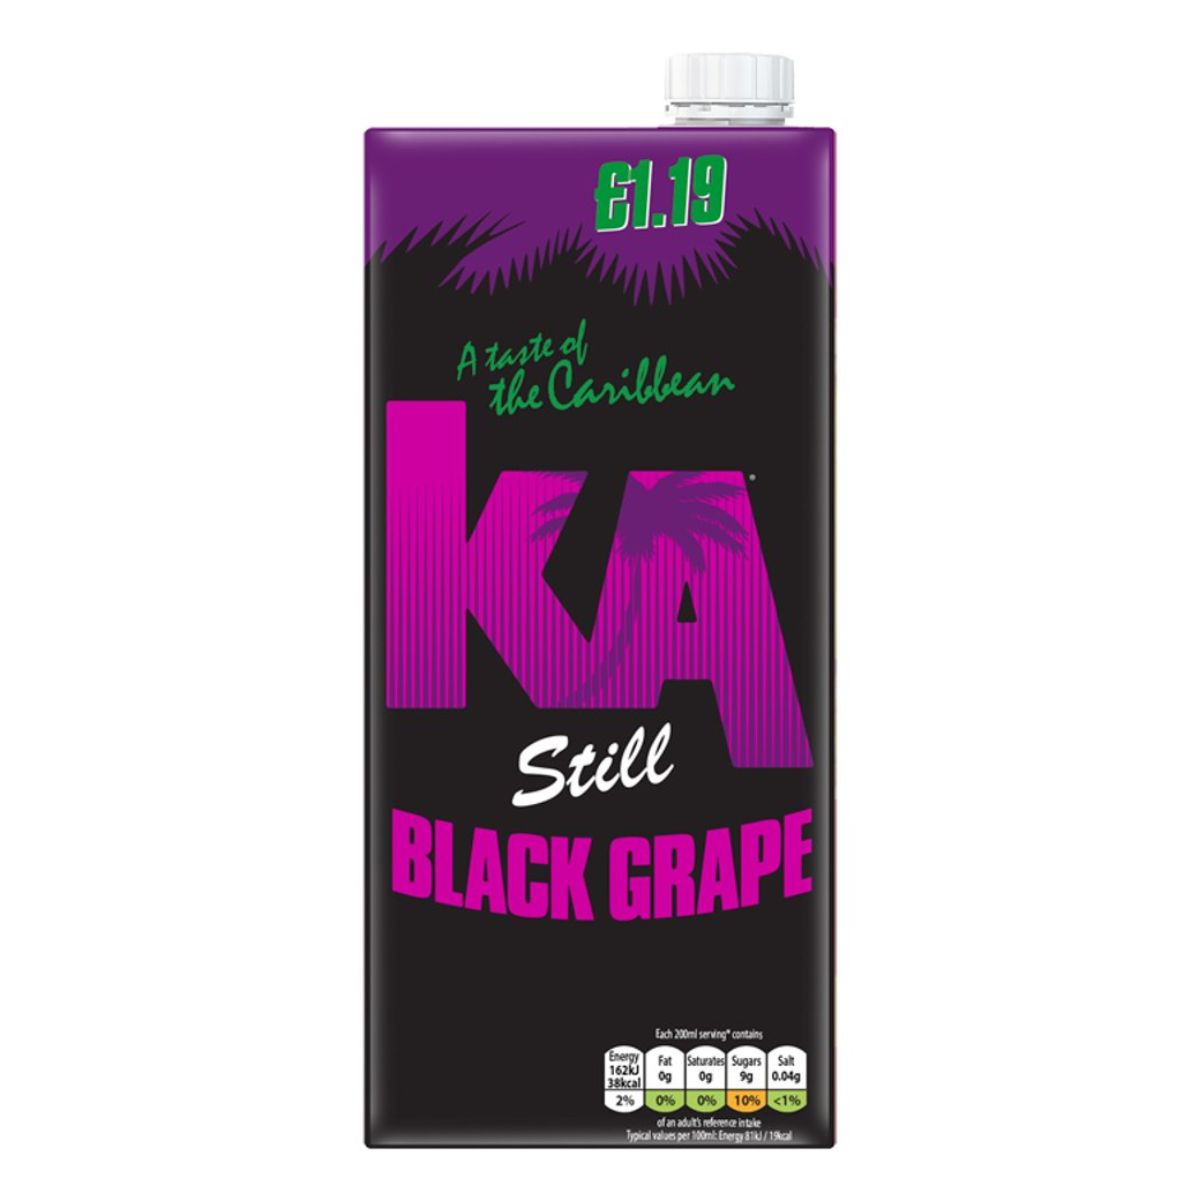 KA - Still Black Grape - 1L still black grape juice.